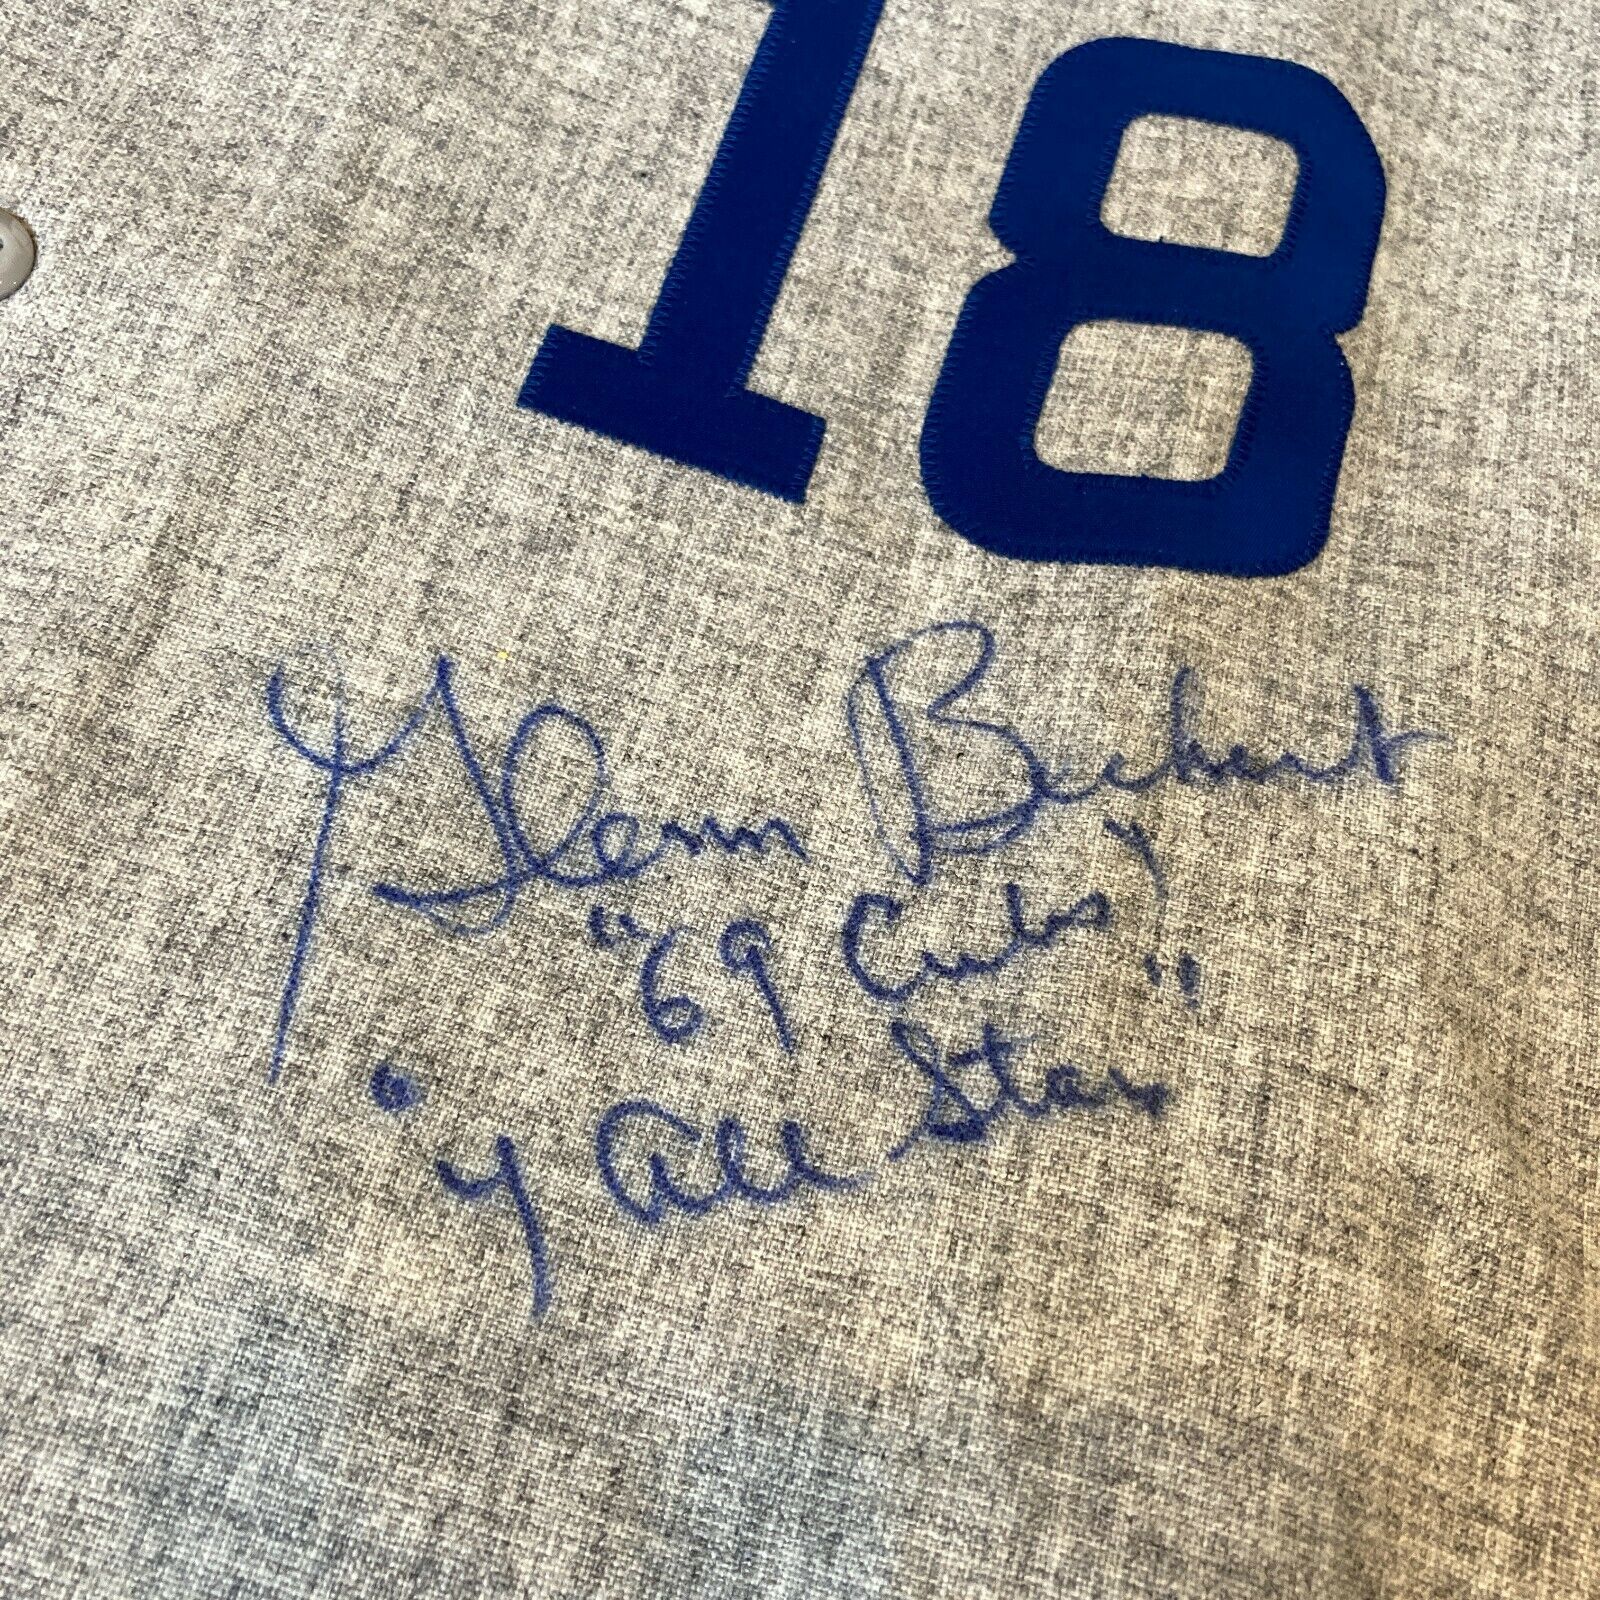 Wrigley Field 100th Birthday Celebration - Pre-game Team Takes the Field  Ceremony - Glenn Beckert Worn 1969 Throwback Jersey - Autographed - Cubs  vs. Diamondbacks - 4/23/14 - HZ144580